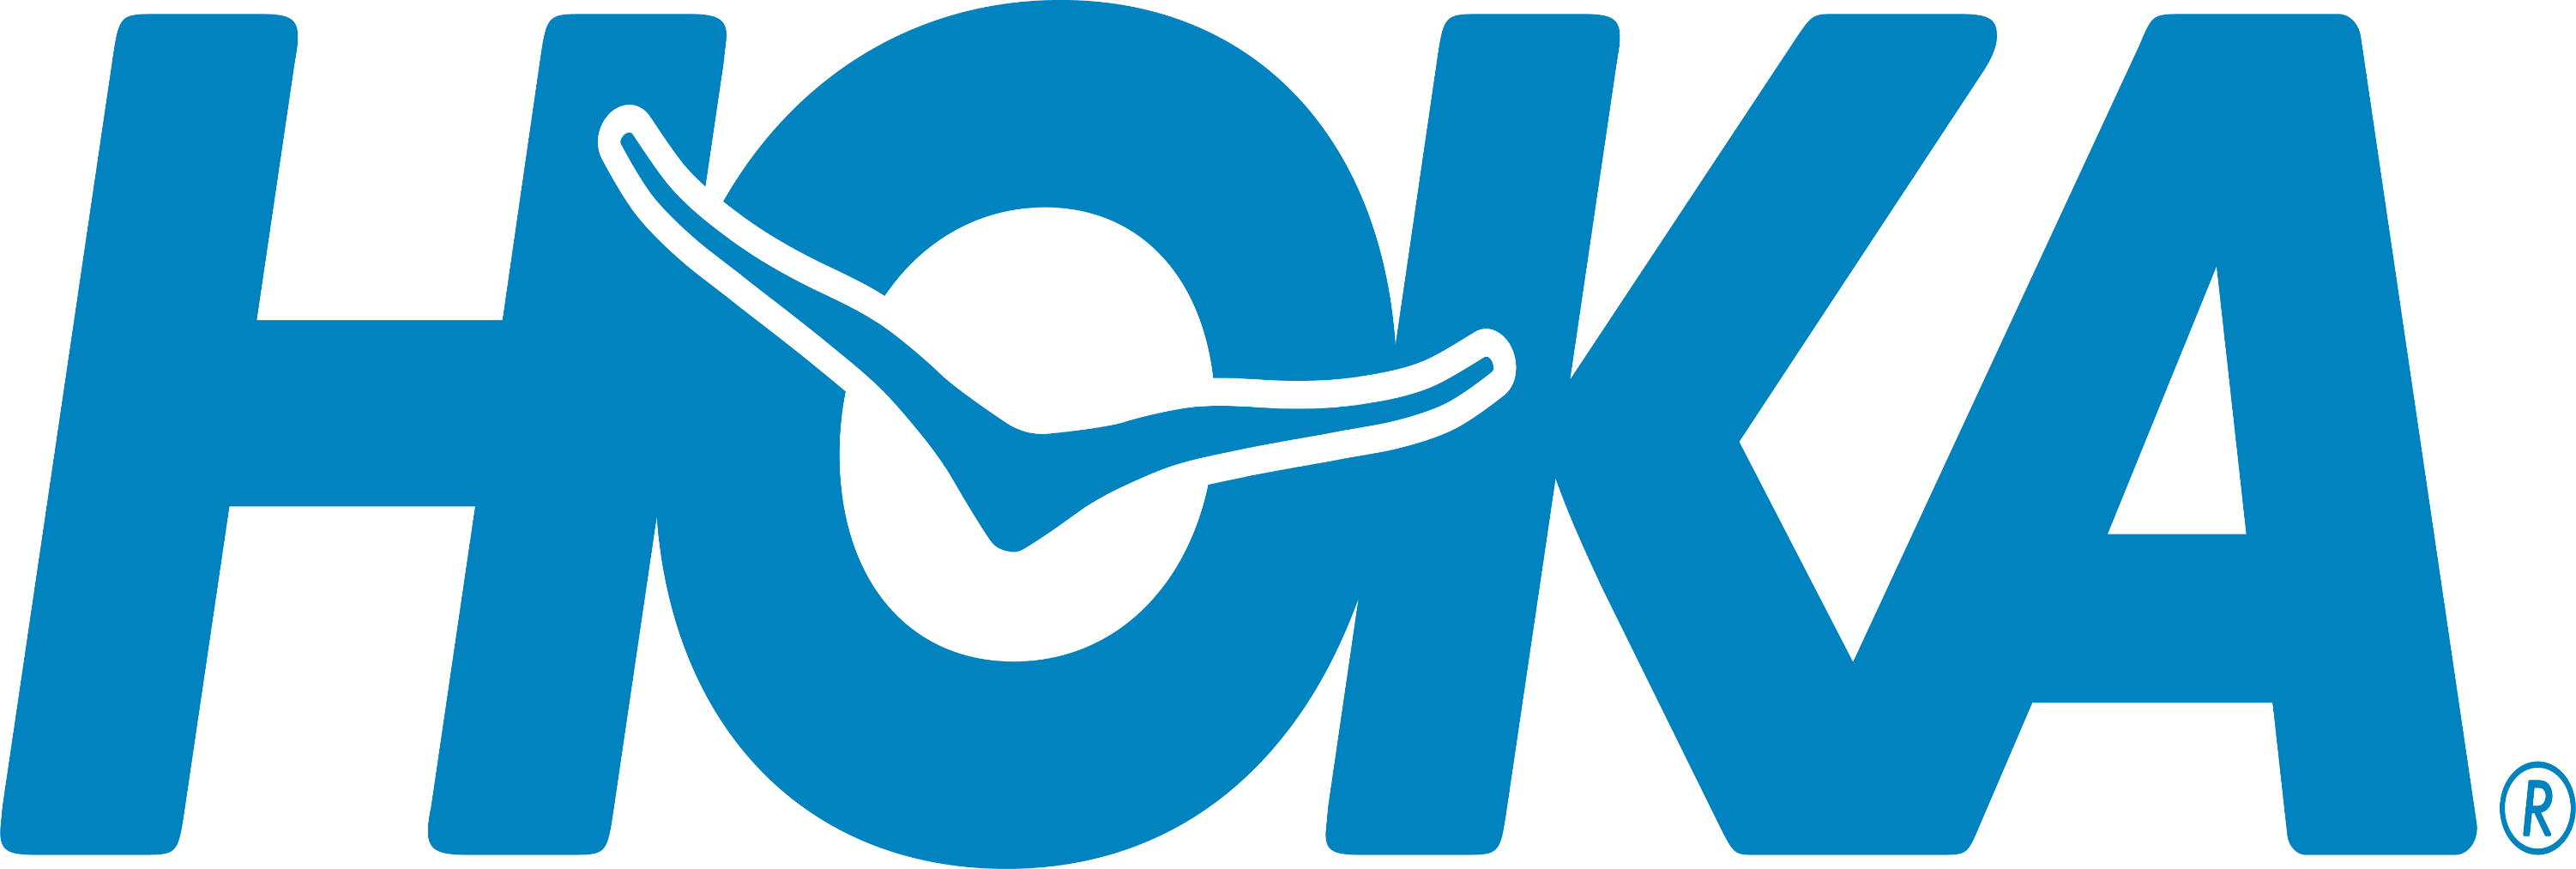 Hoka One Logo